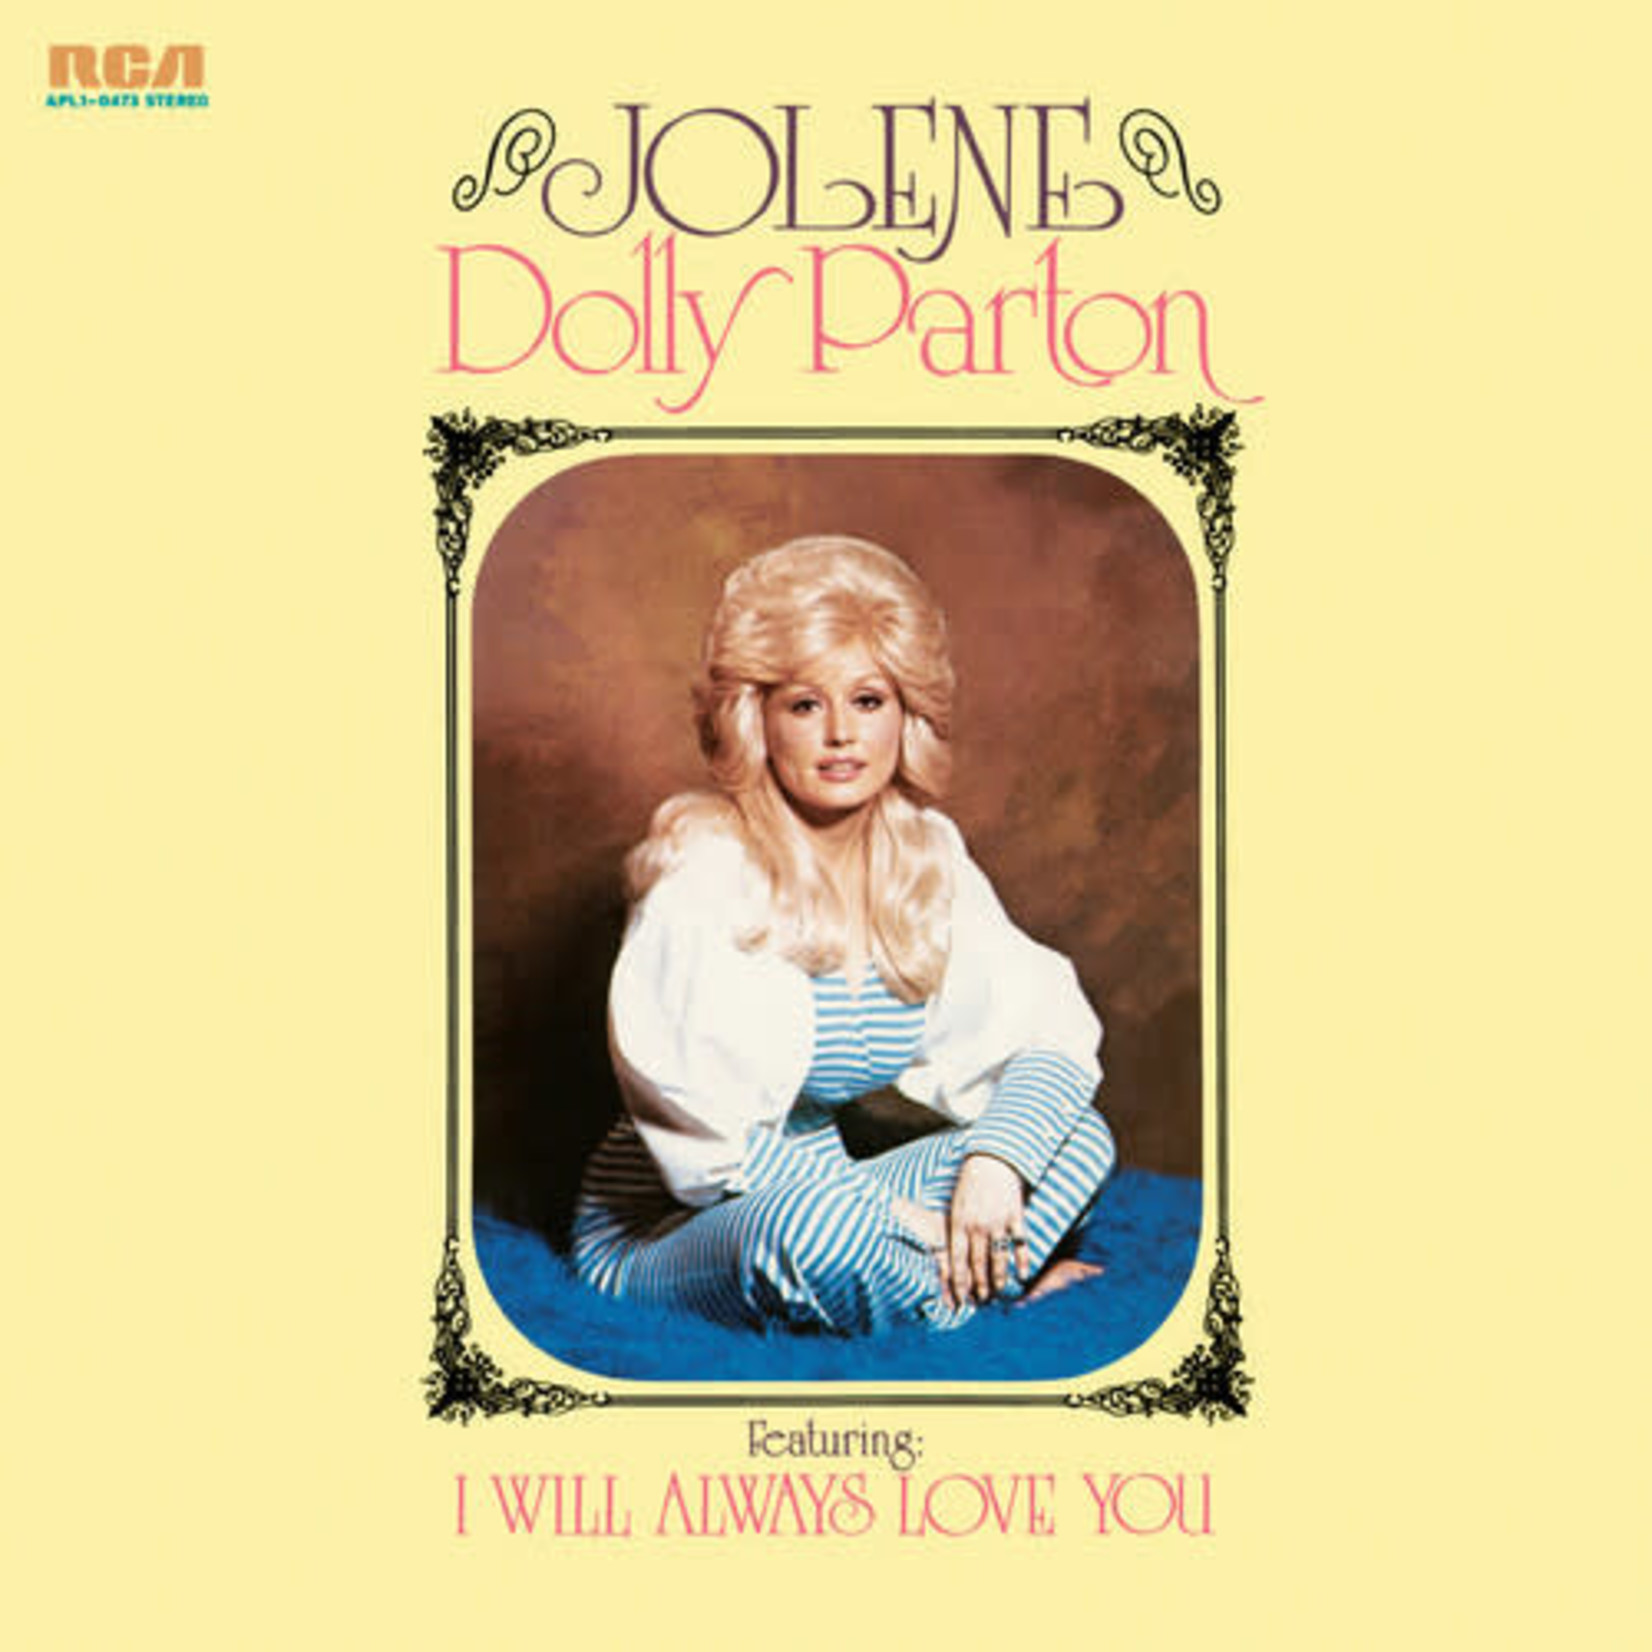 Dolly Parton - Jolene [LP]